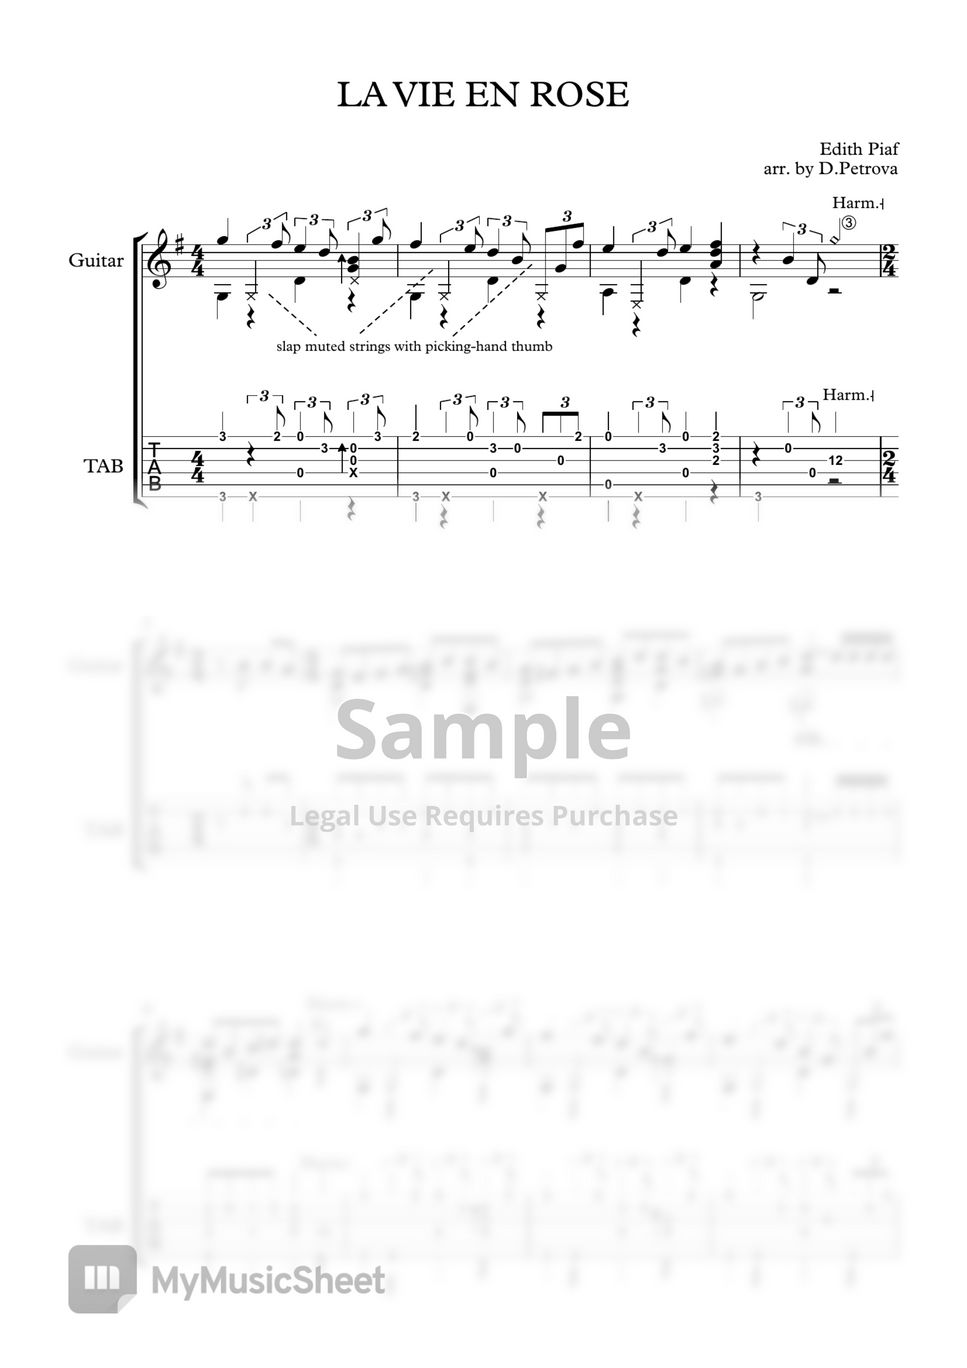 Edith Piaf - La Vie En Rose (Fingerstyle Guitar Arrangement, No Capo, Standard Tuning) by D.Petrova (Edora)